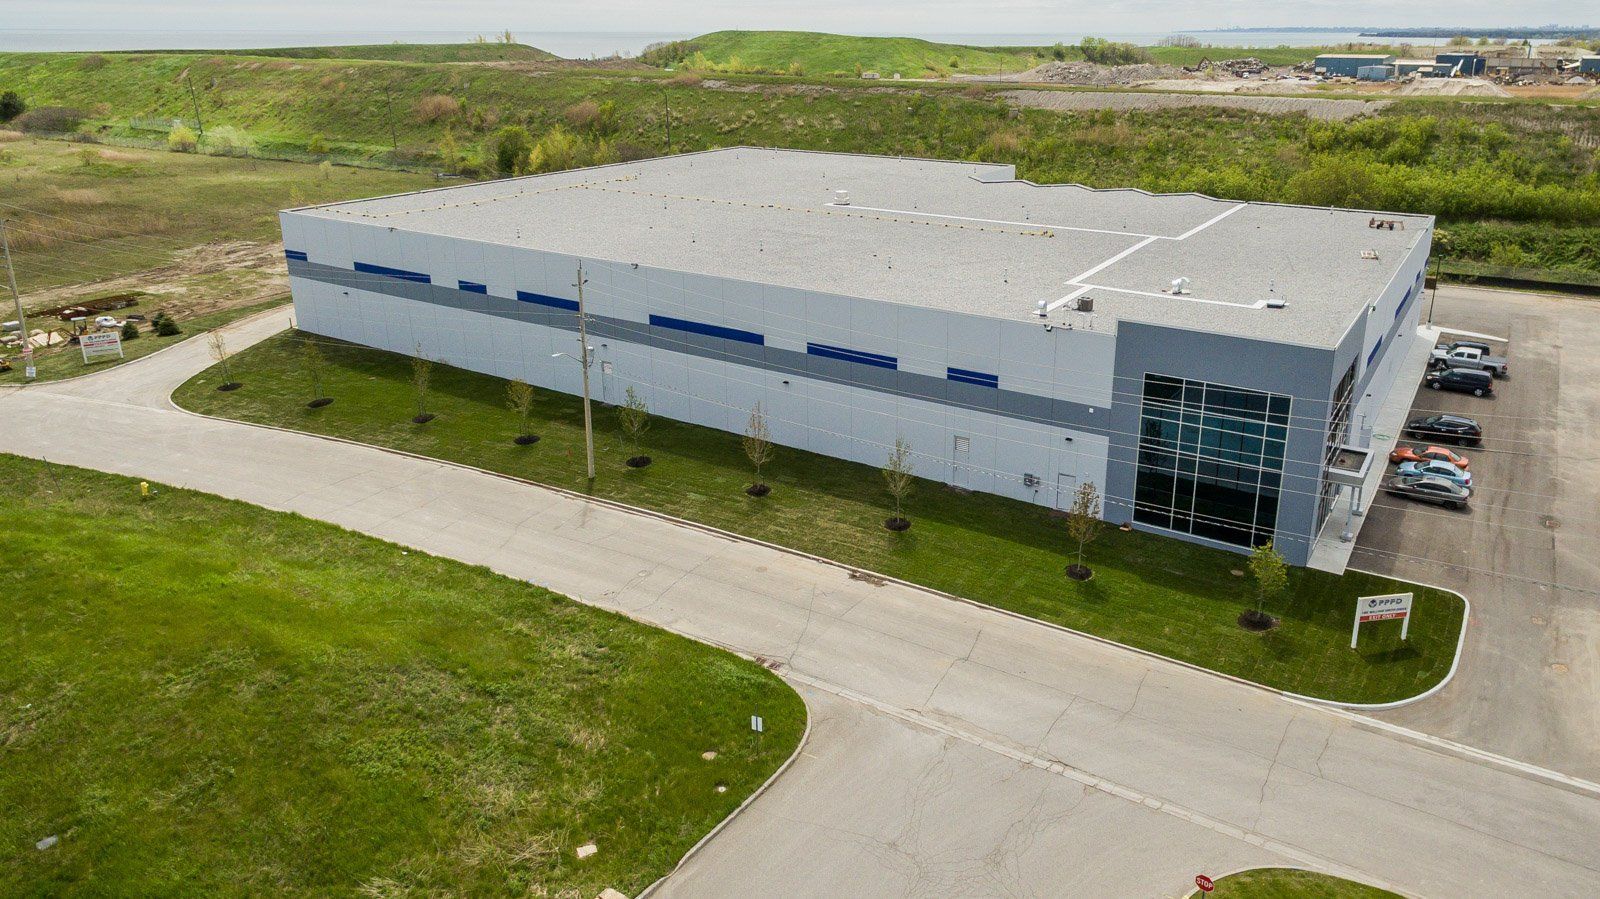 PPFD New Facility - Whitby, Ontario